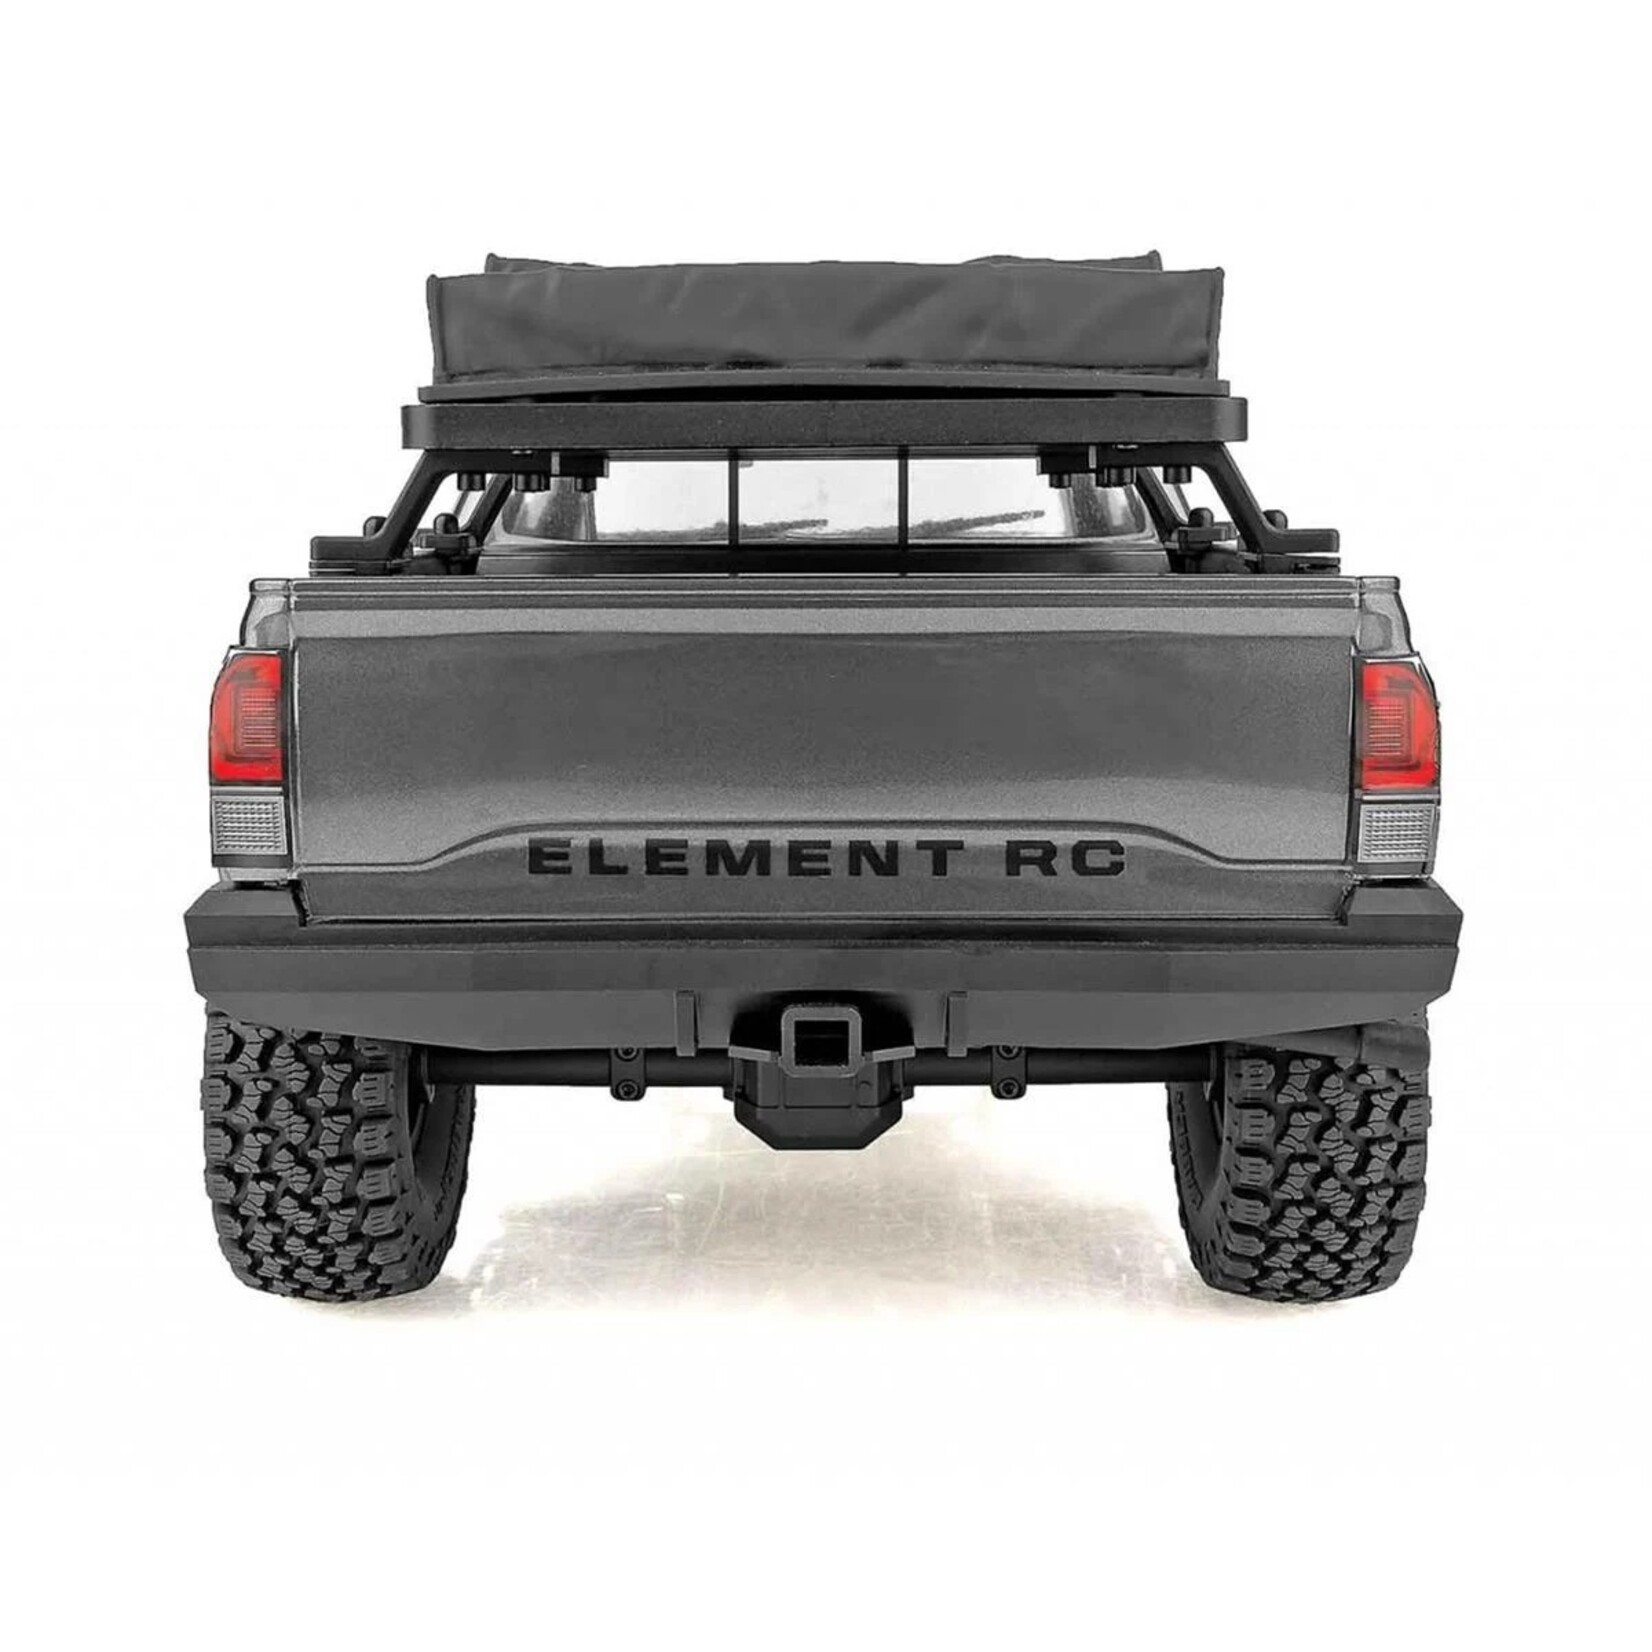 Element RC Element RC Enduro Knightrunner 4x4 RTR 1/10 Rock Crawler w/2.4GHz Radio #40113